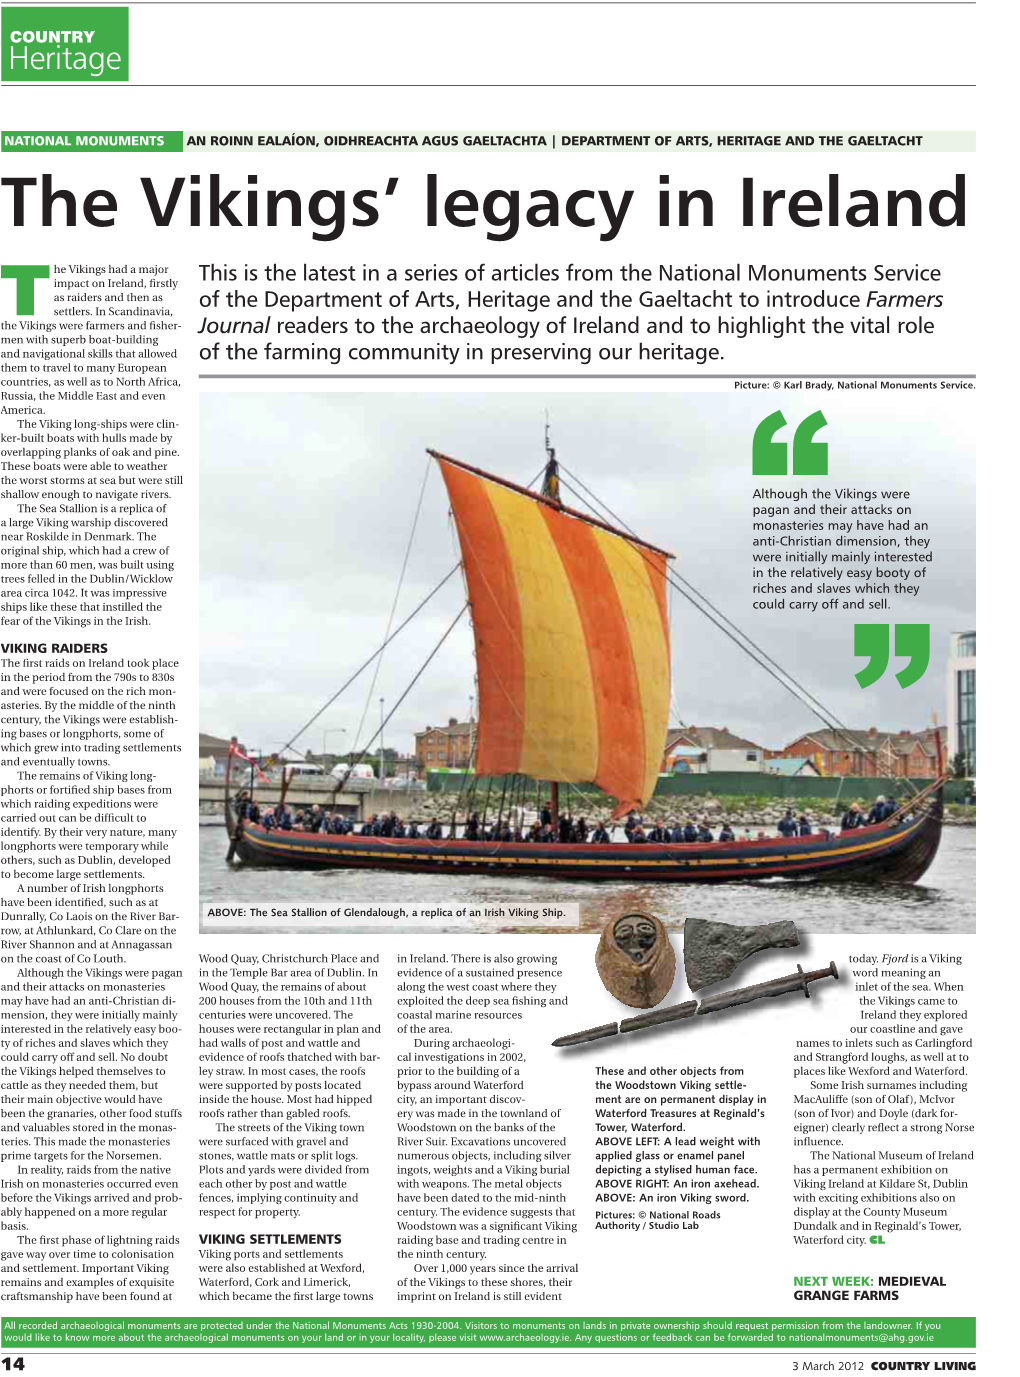 The Vikings' Legacy in Ireland